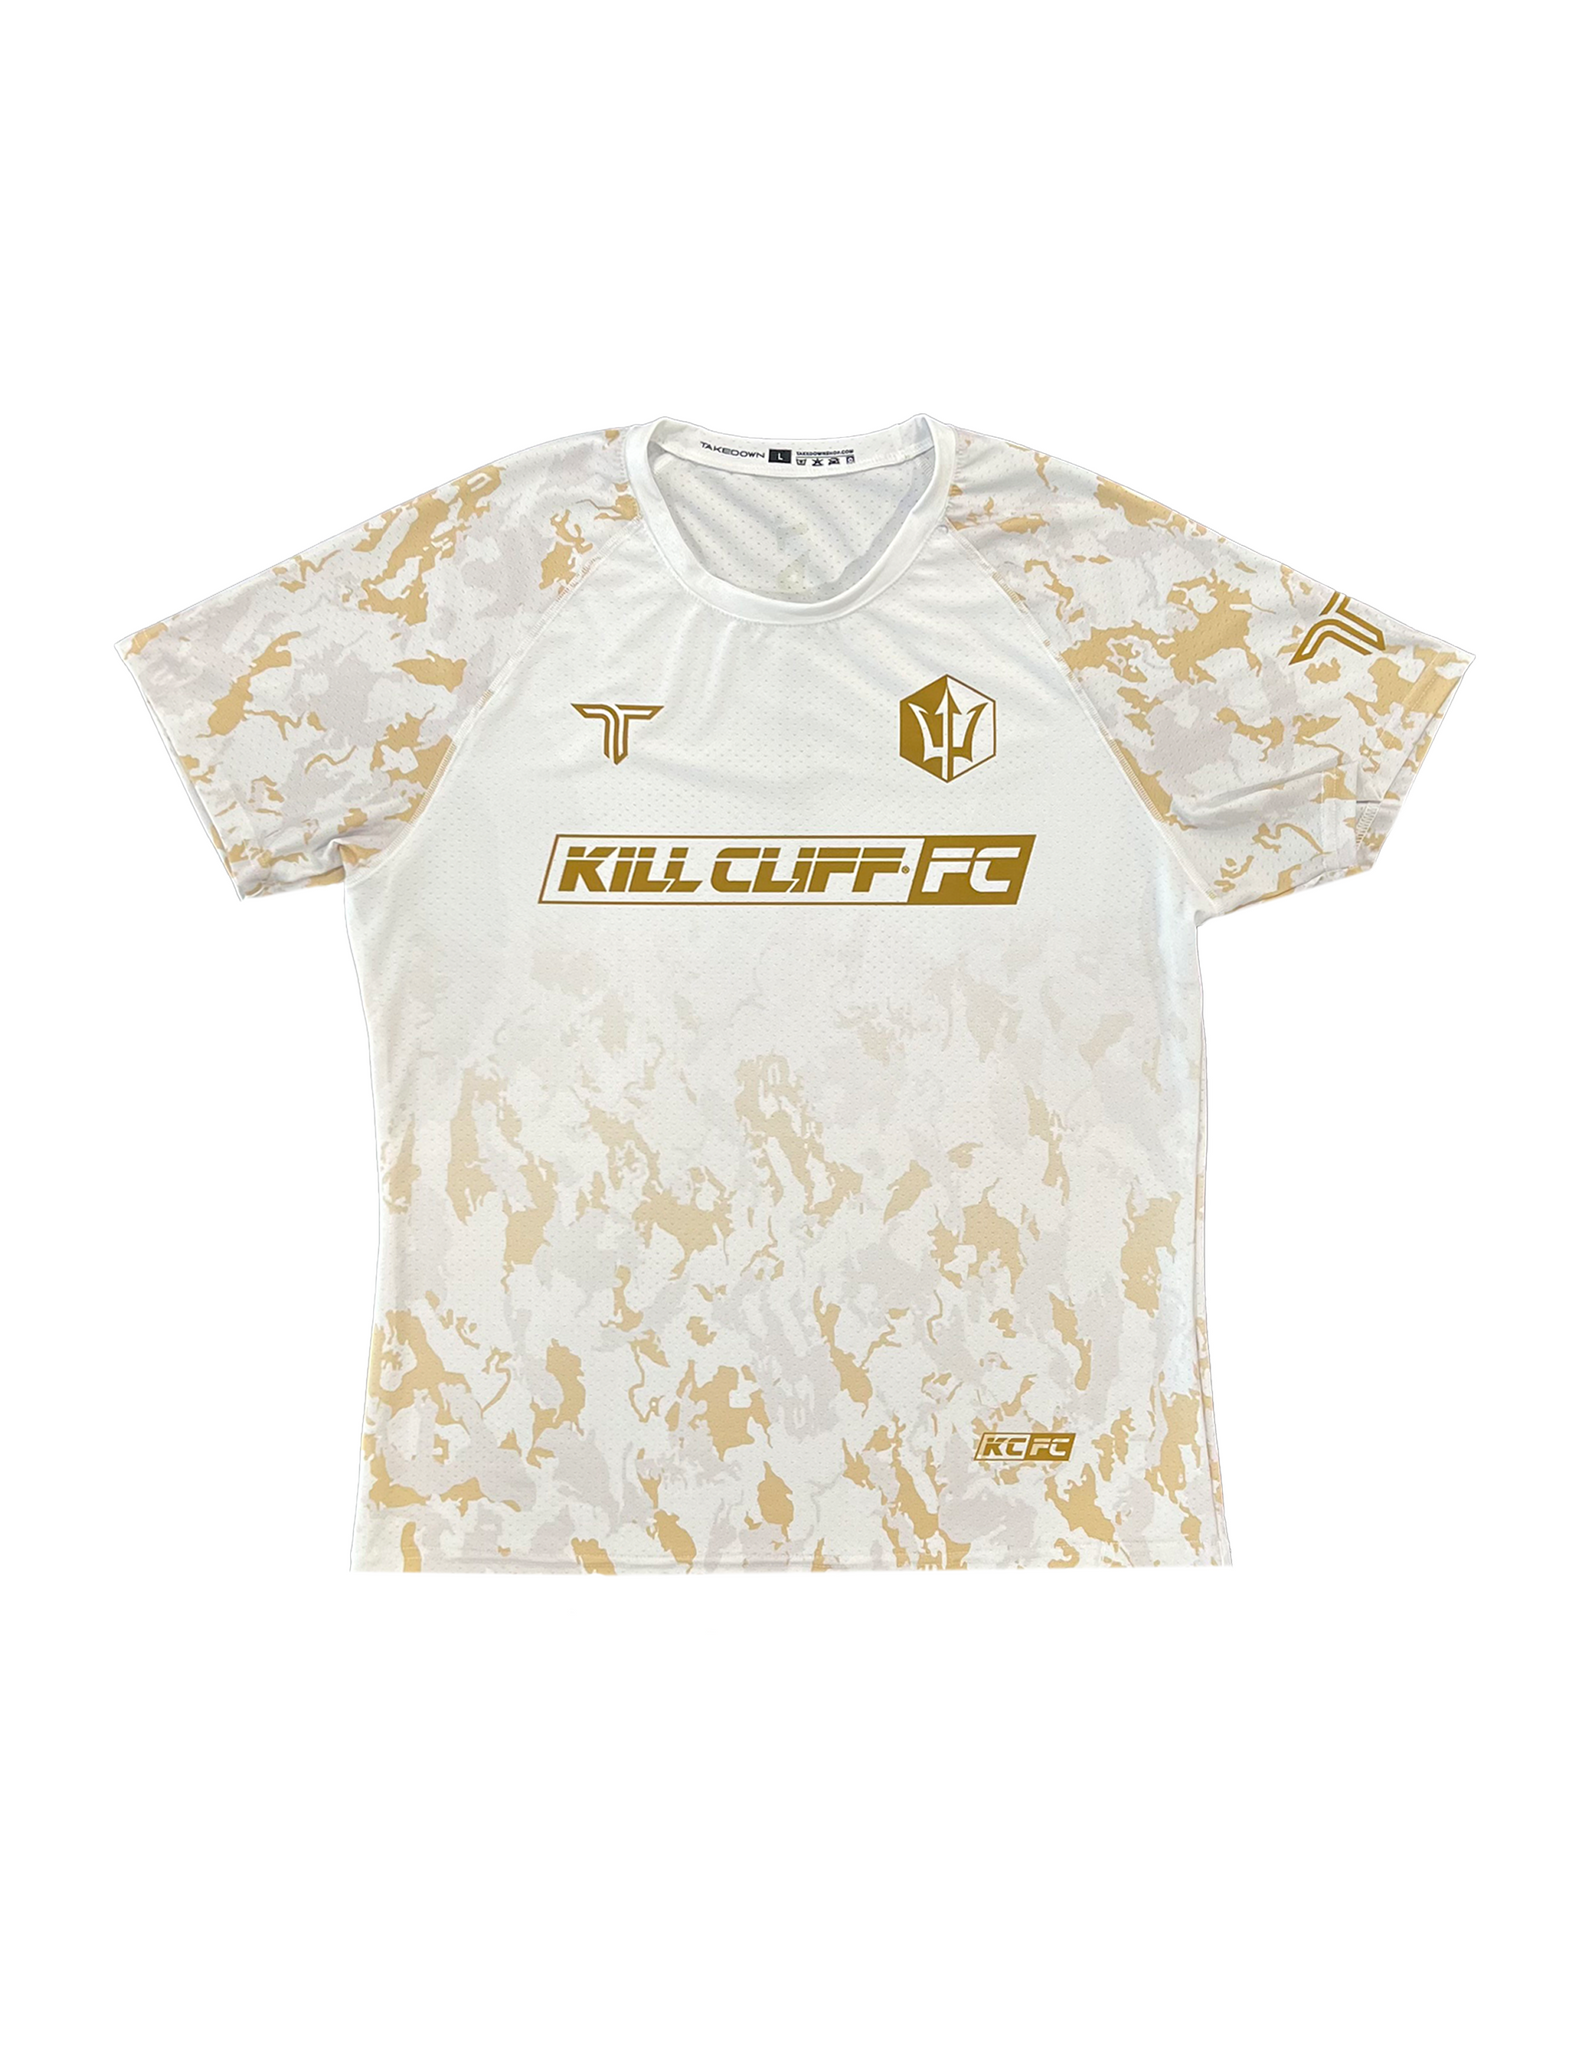 KILL CLIFF® FC. Raglan T-Shirt - White